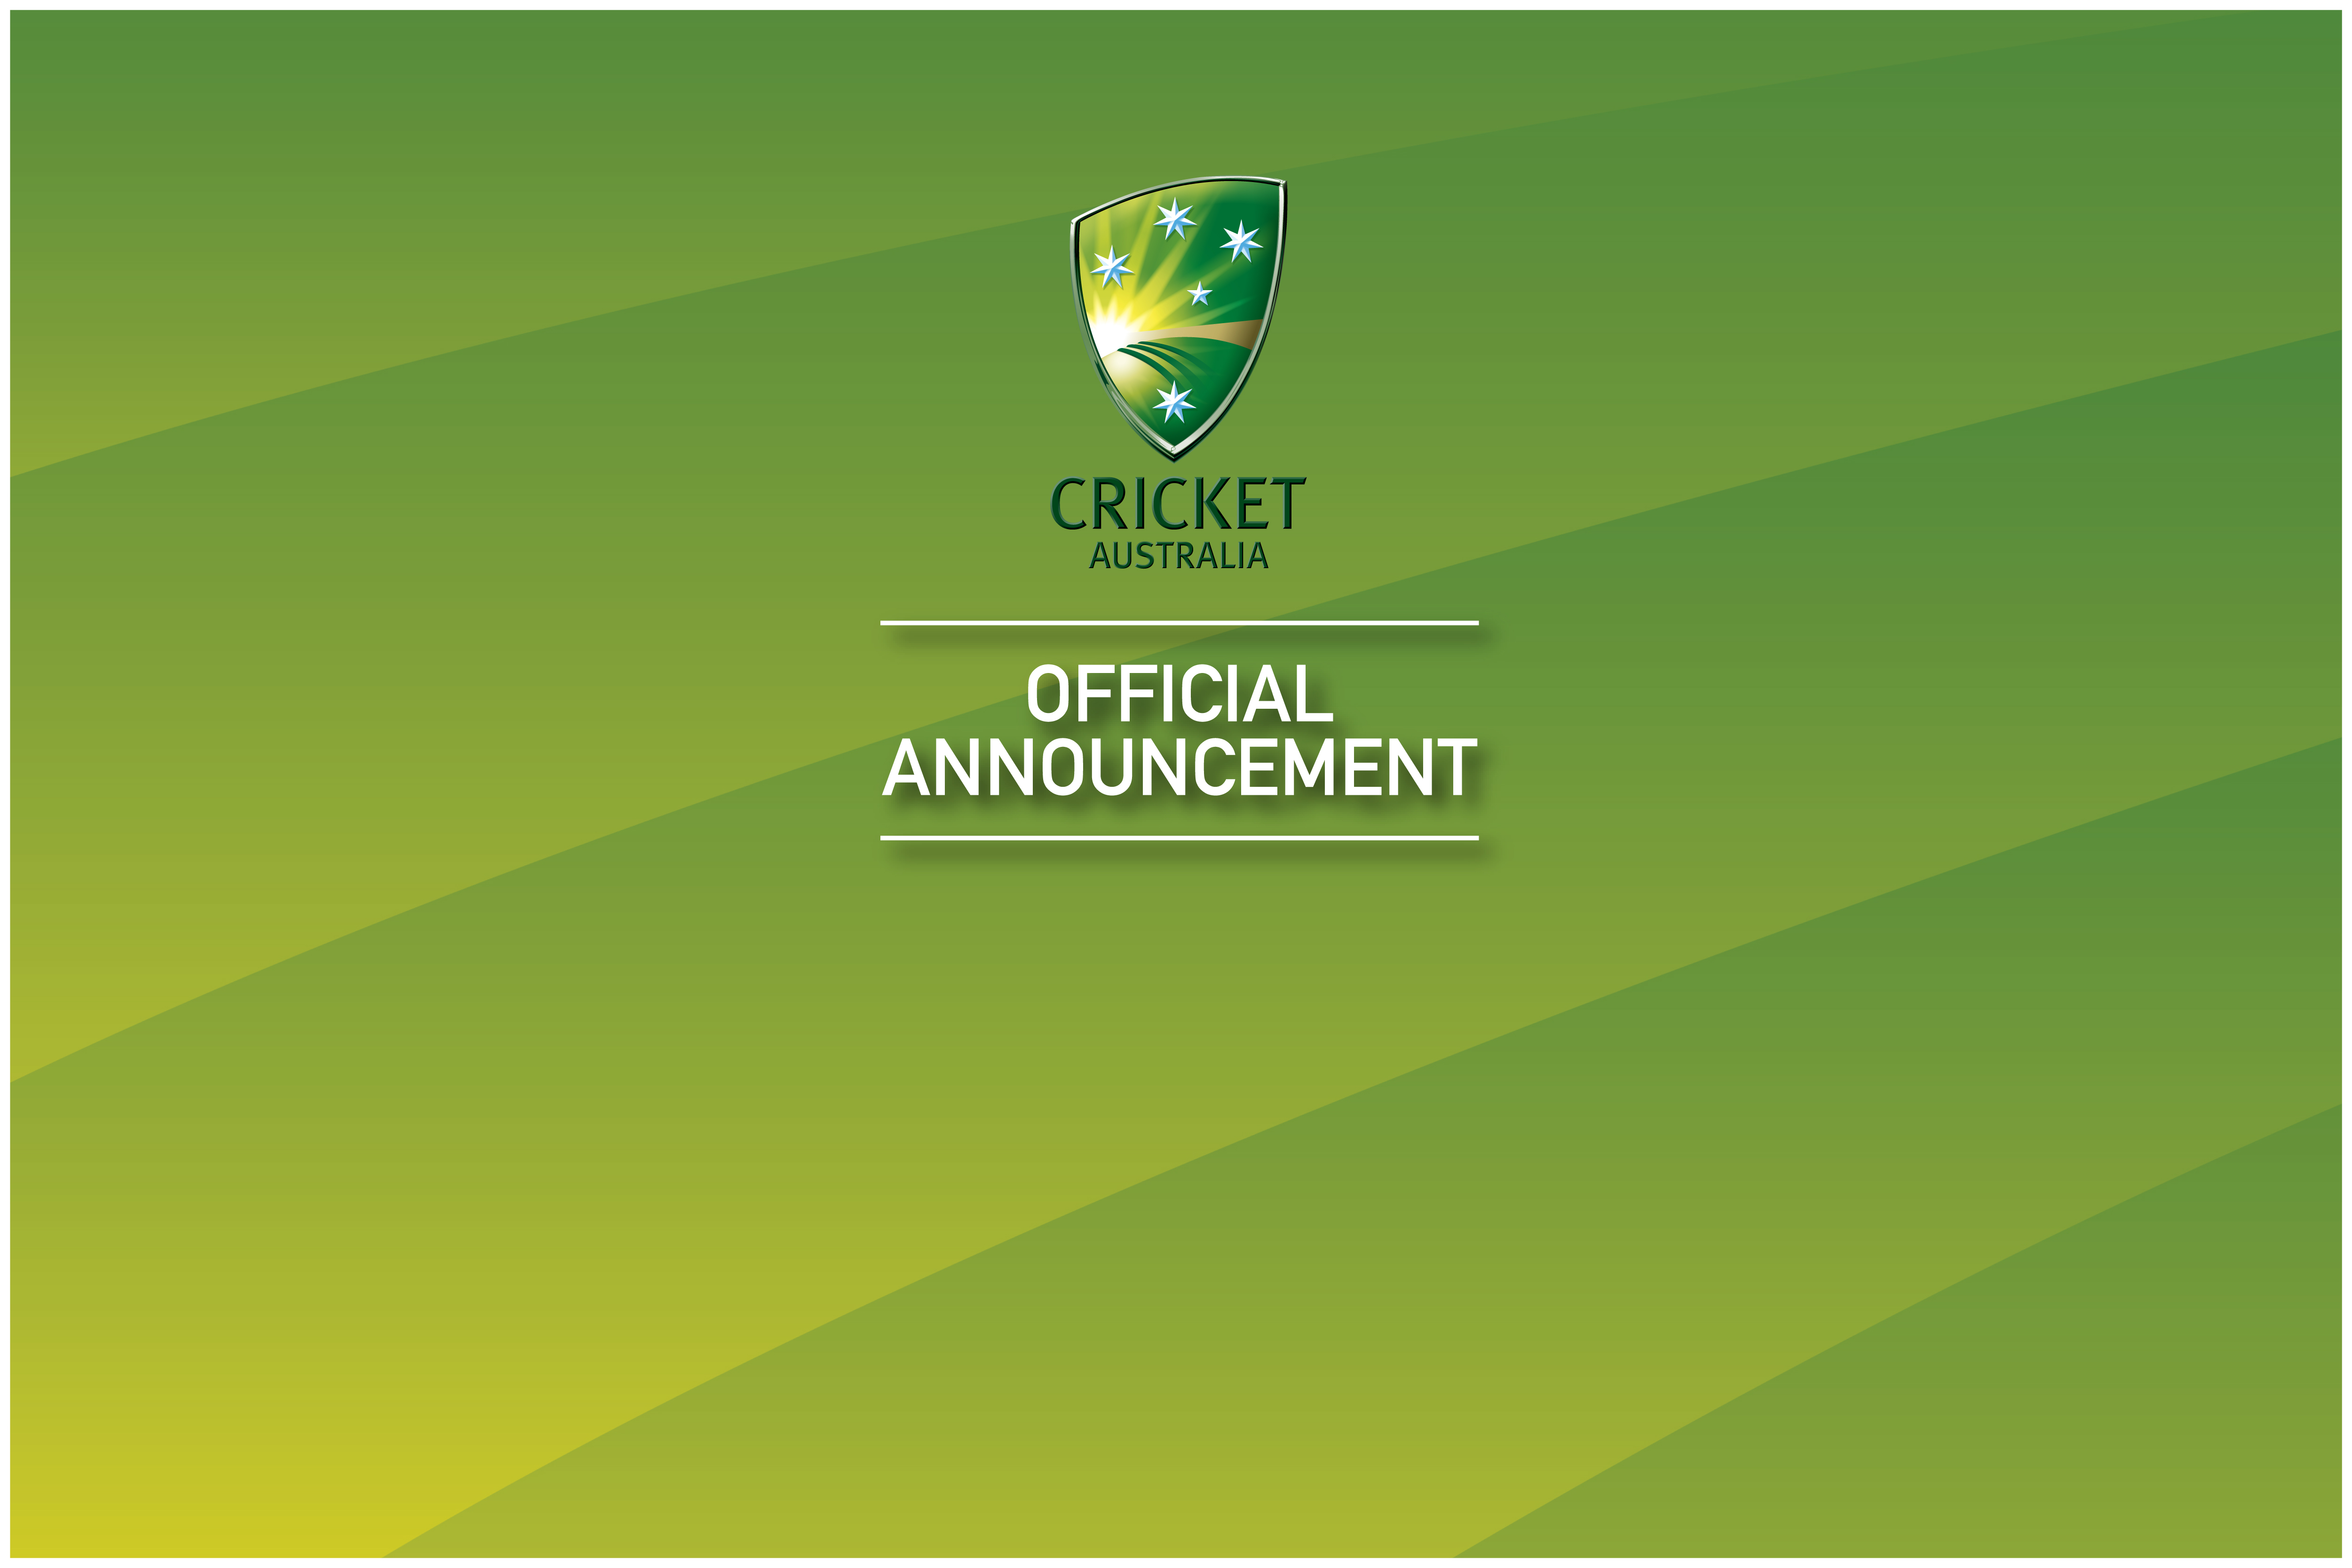 Cricket Australia: Schedule confirmed for Dettol men's T20I Series against Sri Lanka